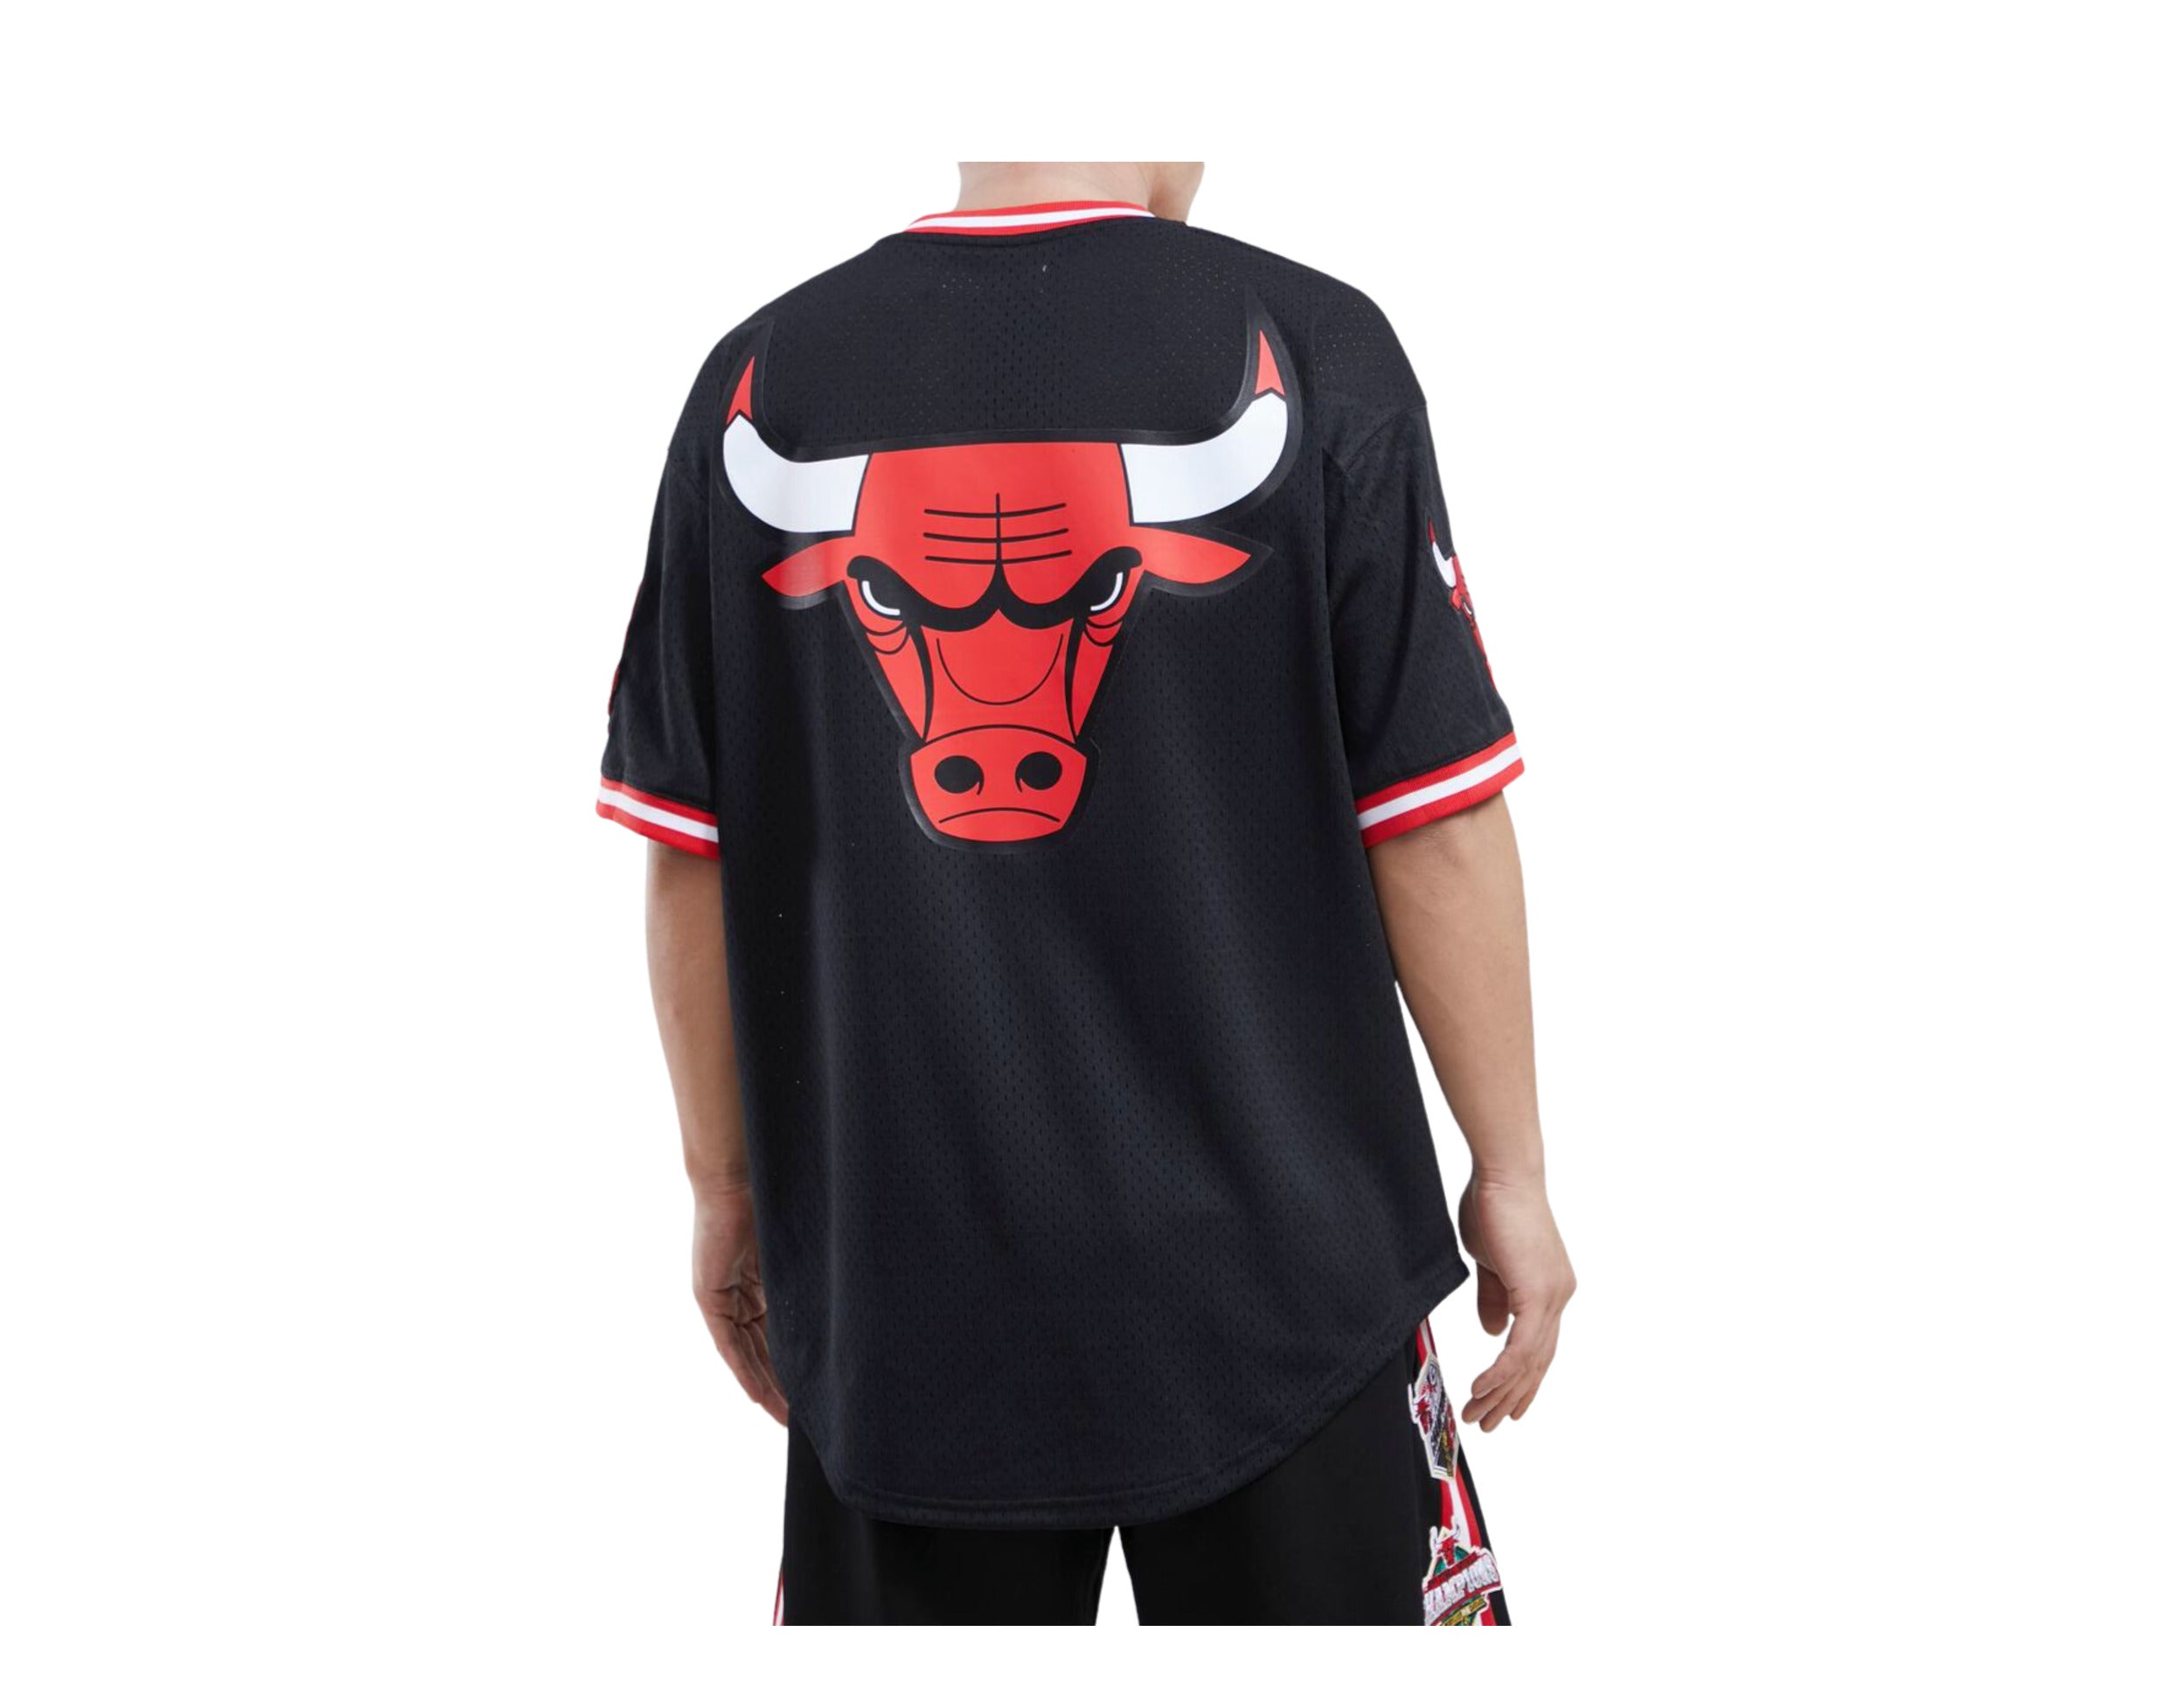 Pro Standard NBA Chicago Bulls Pro Team Black/Red Men's Shirt BCB15139-BLK - XL